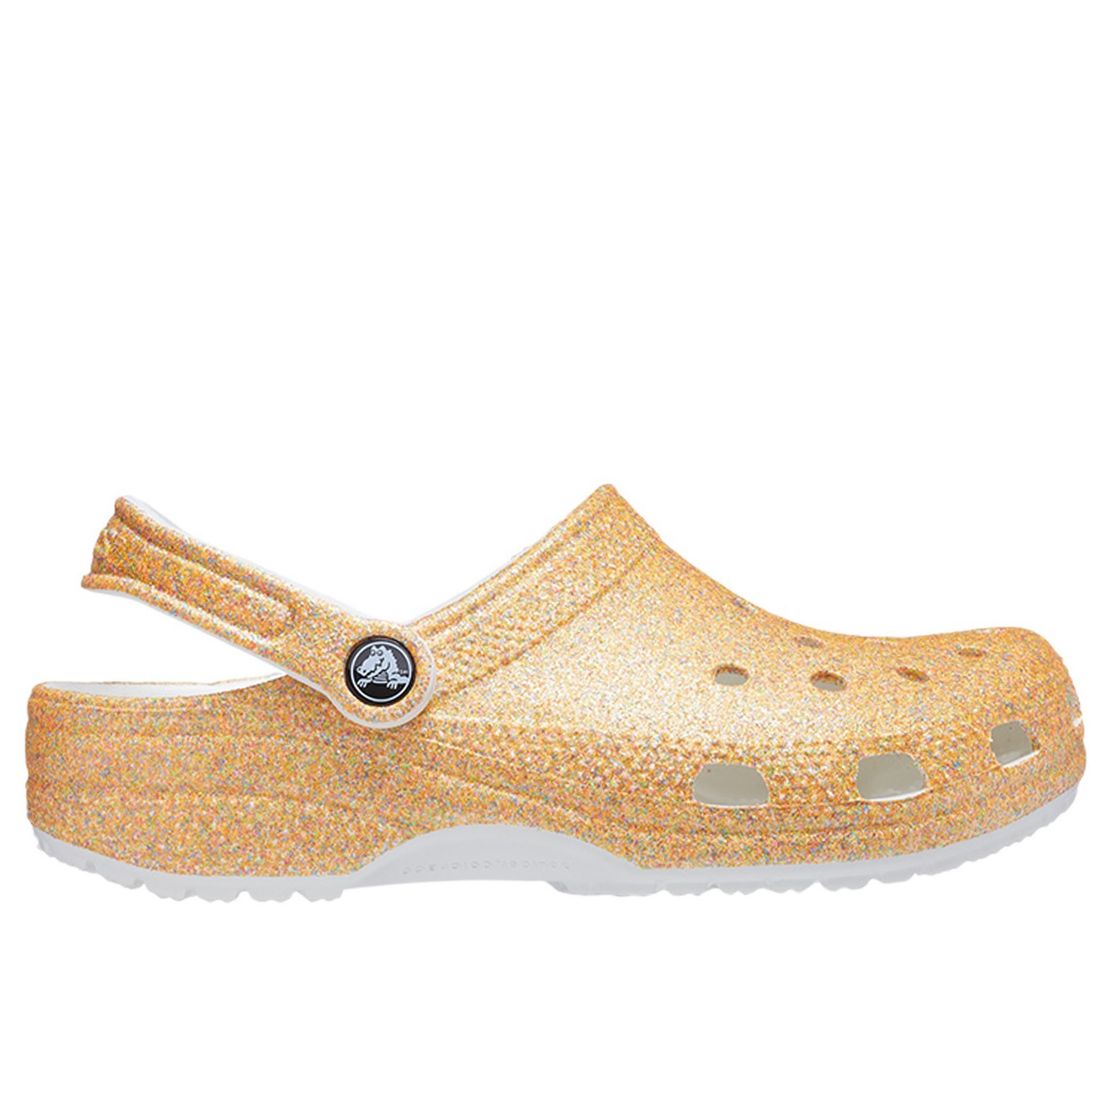 Crocs - 36 - Mujer - Calzado - Tus Zapatos